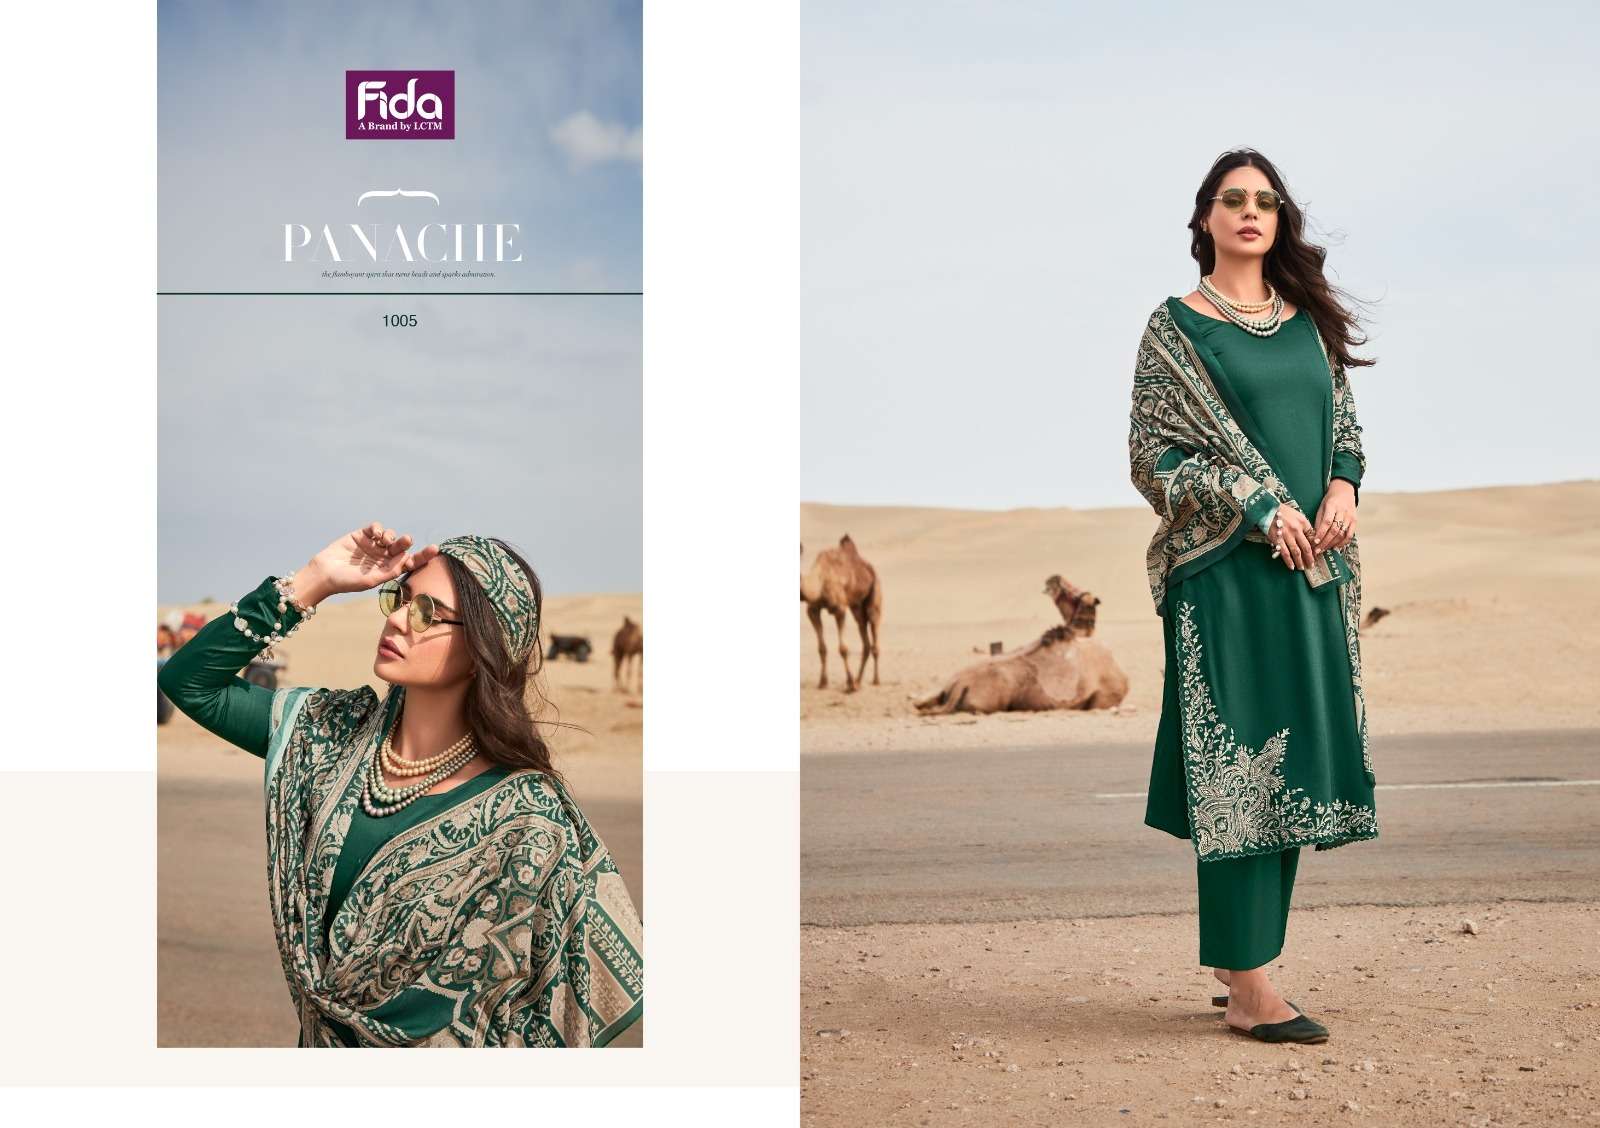 fida taksh pure cotton innovative look salwar suit catalog